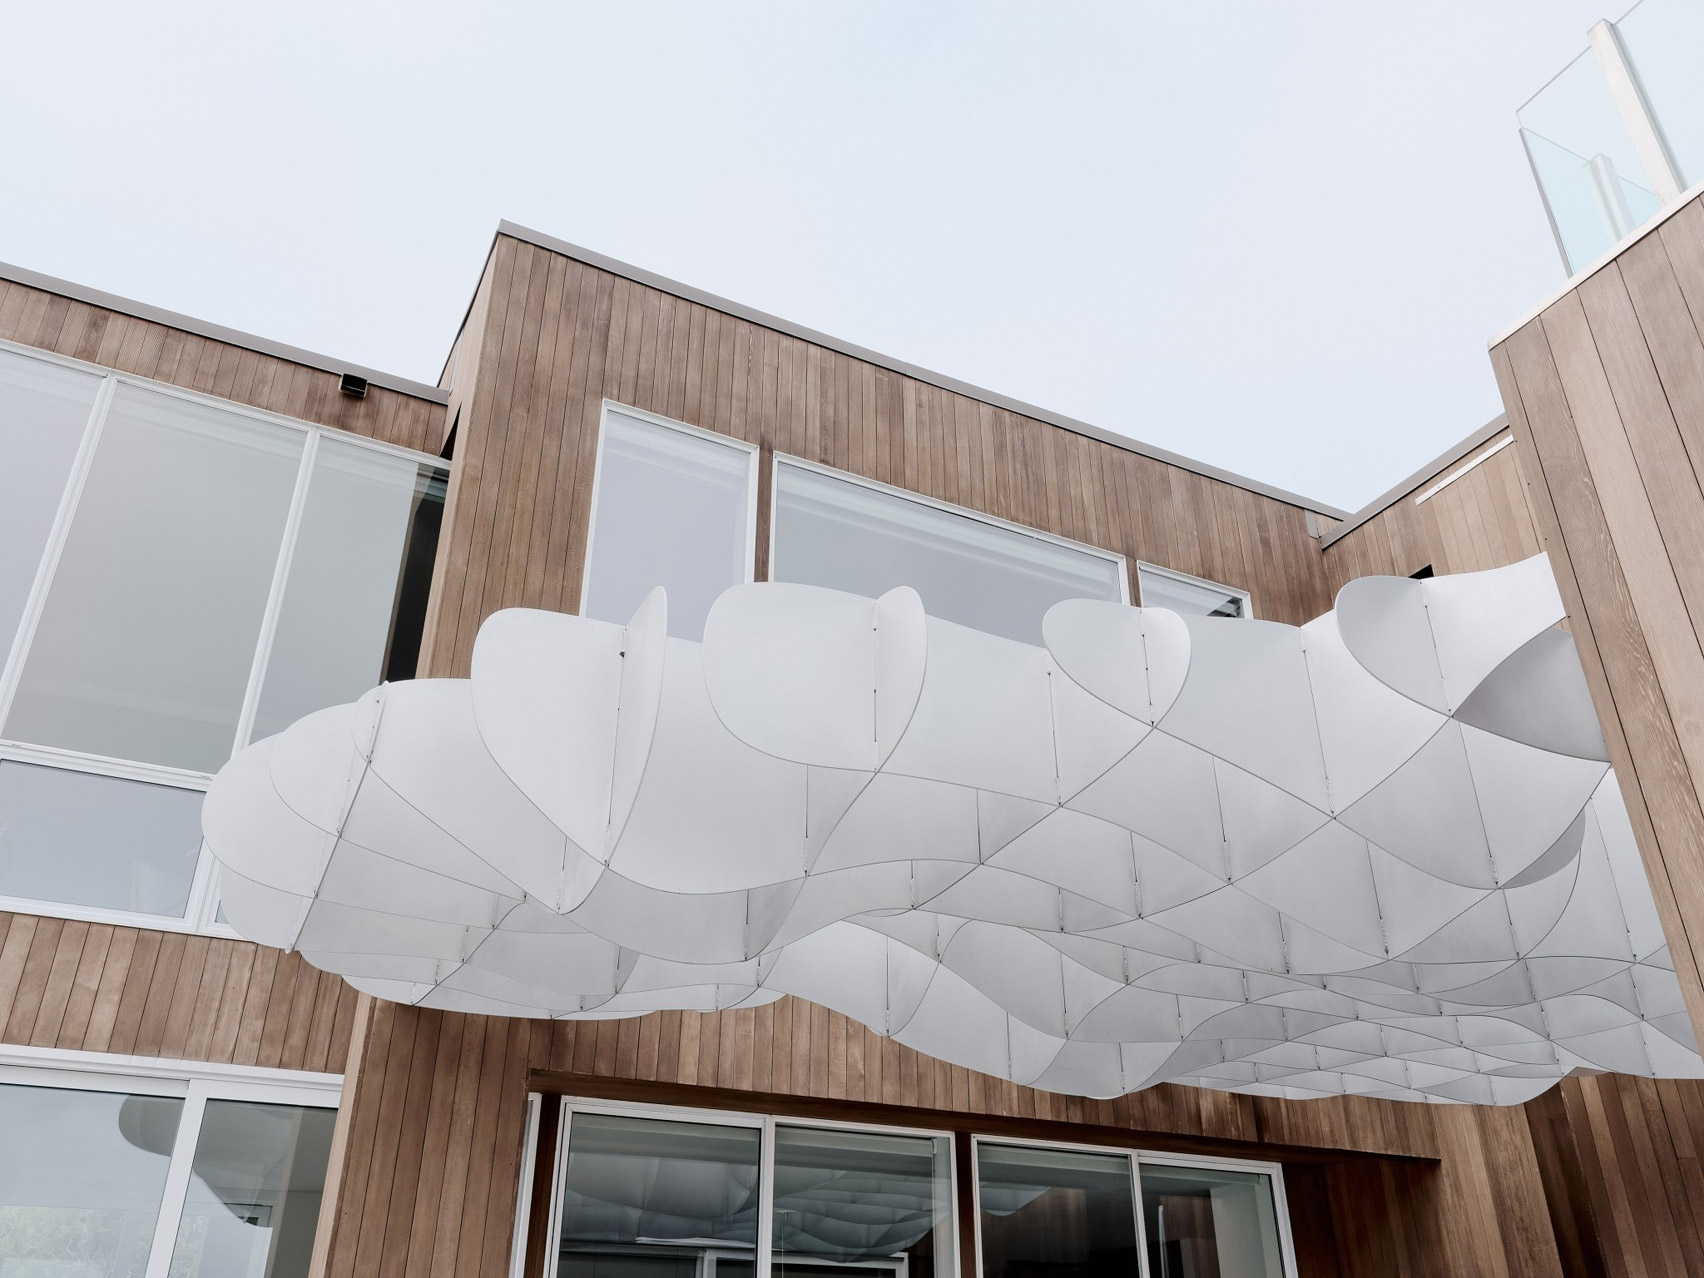 Softie The Cloud House / OPA Interior Design Studio